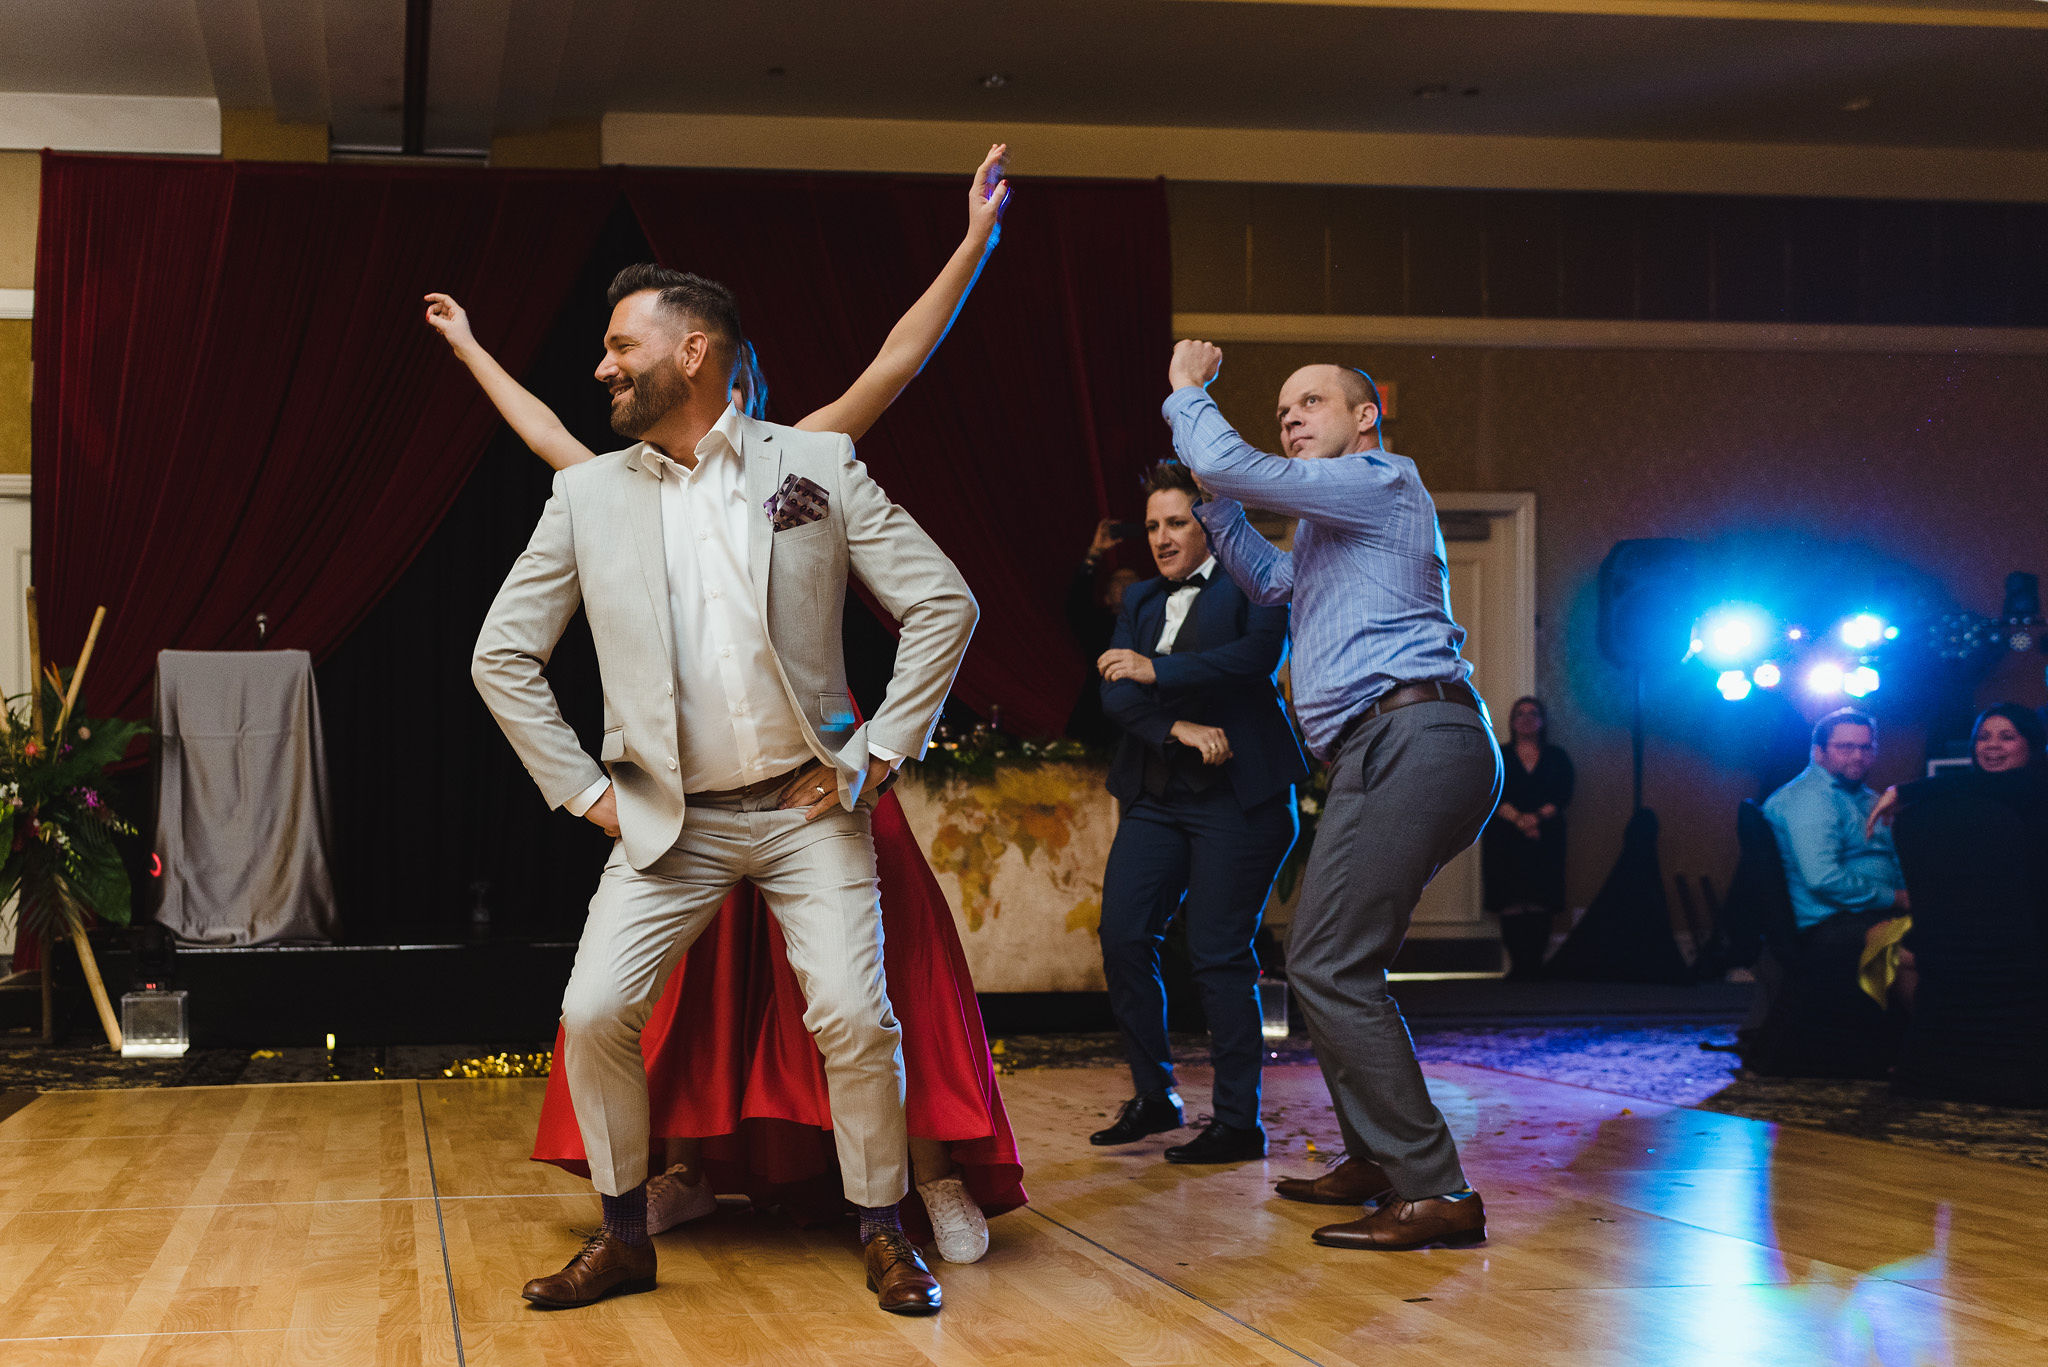 guests dancing during a fun wedding reception at the Hilton Fallsview in Niagara Falls